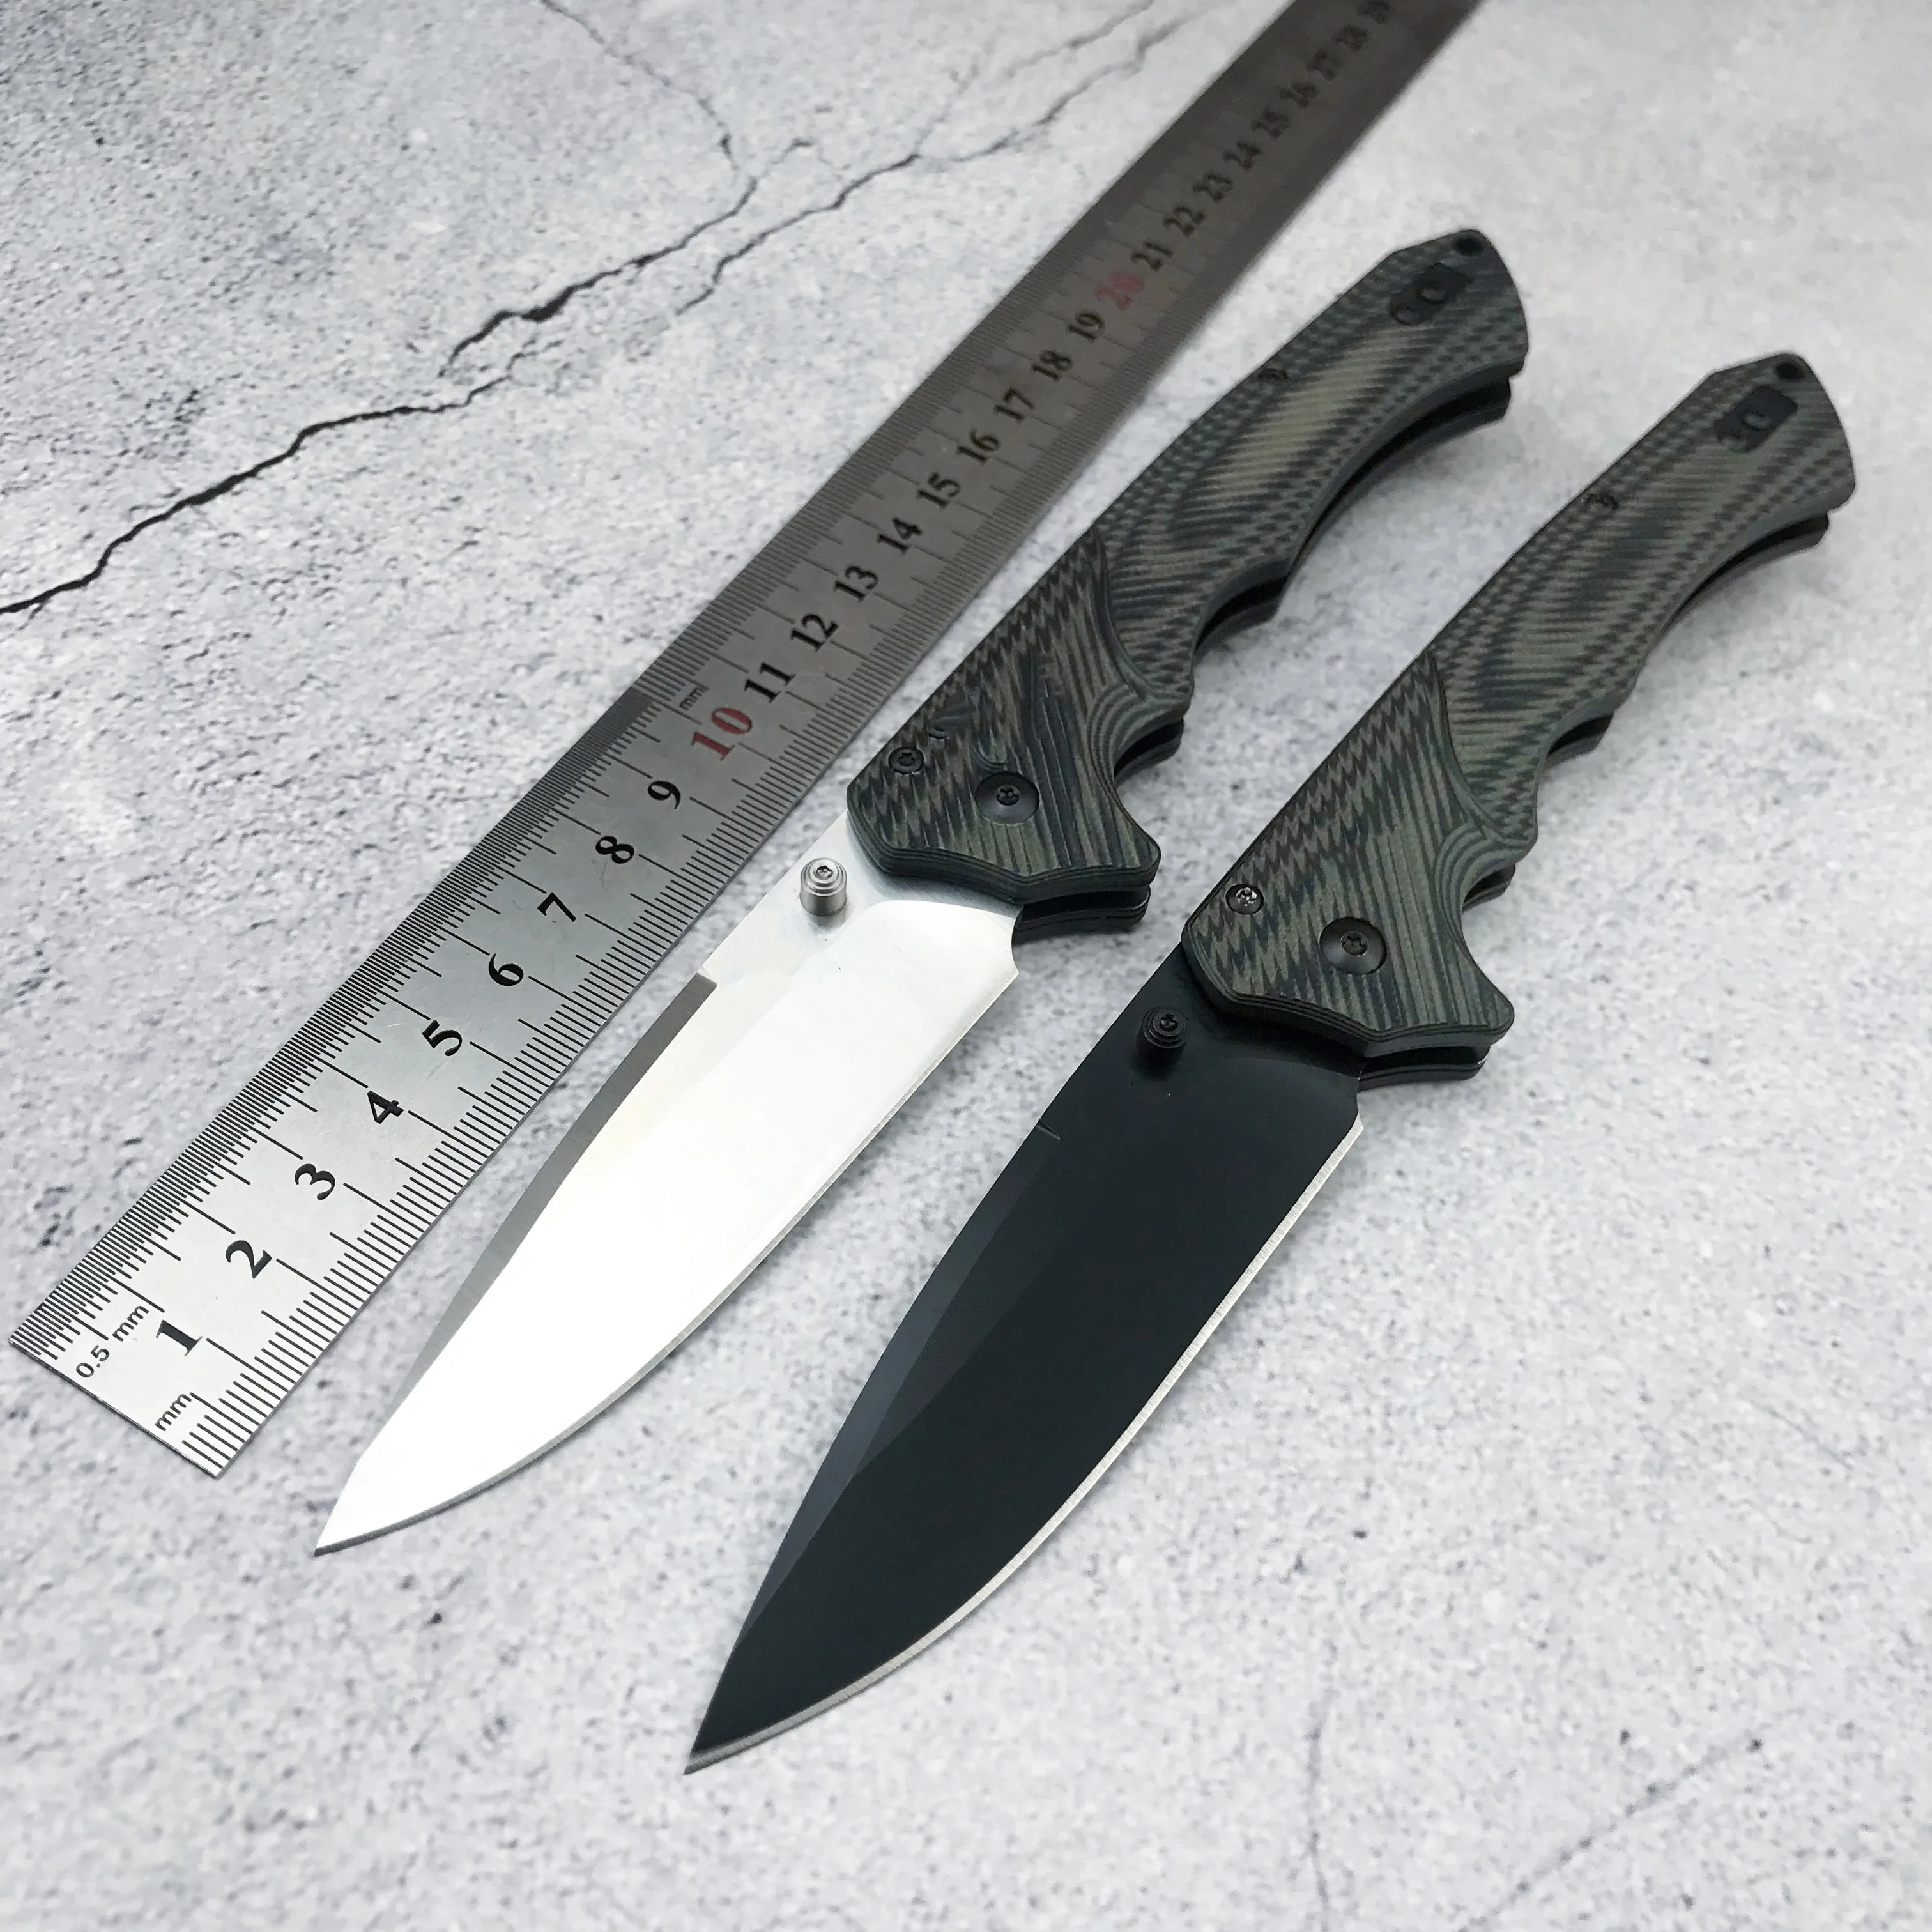 

BM 615BK Folding Knife S30V Blade G10 Handle Outdoor Survival Camping Hunting Tactical Pocket Knives Rescue EDC Sharp Tools Gift